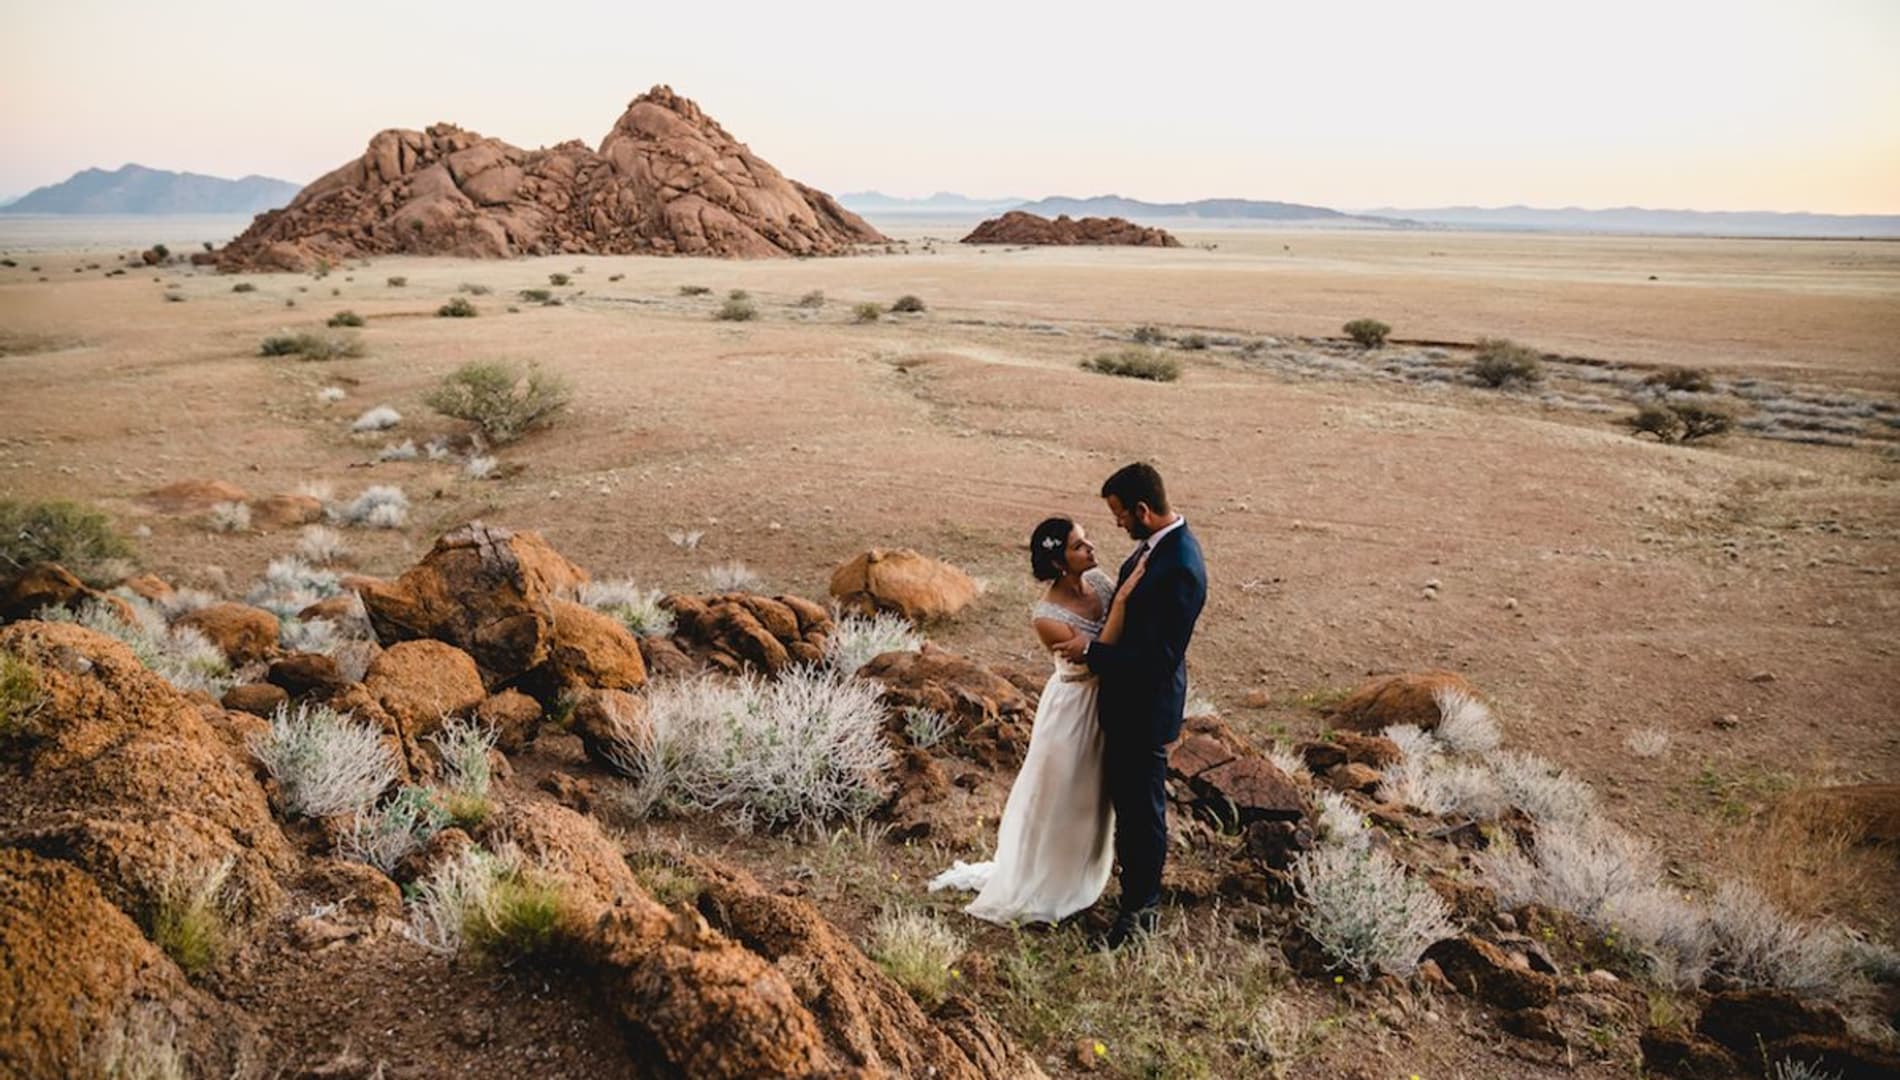 Namibia Safari Weddings: All You Need to Know